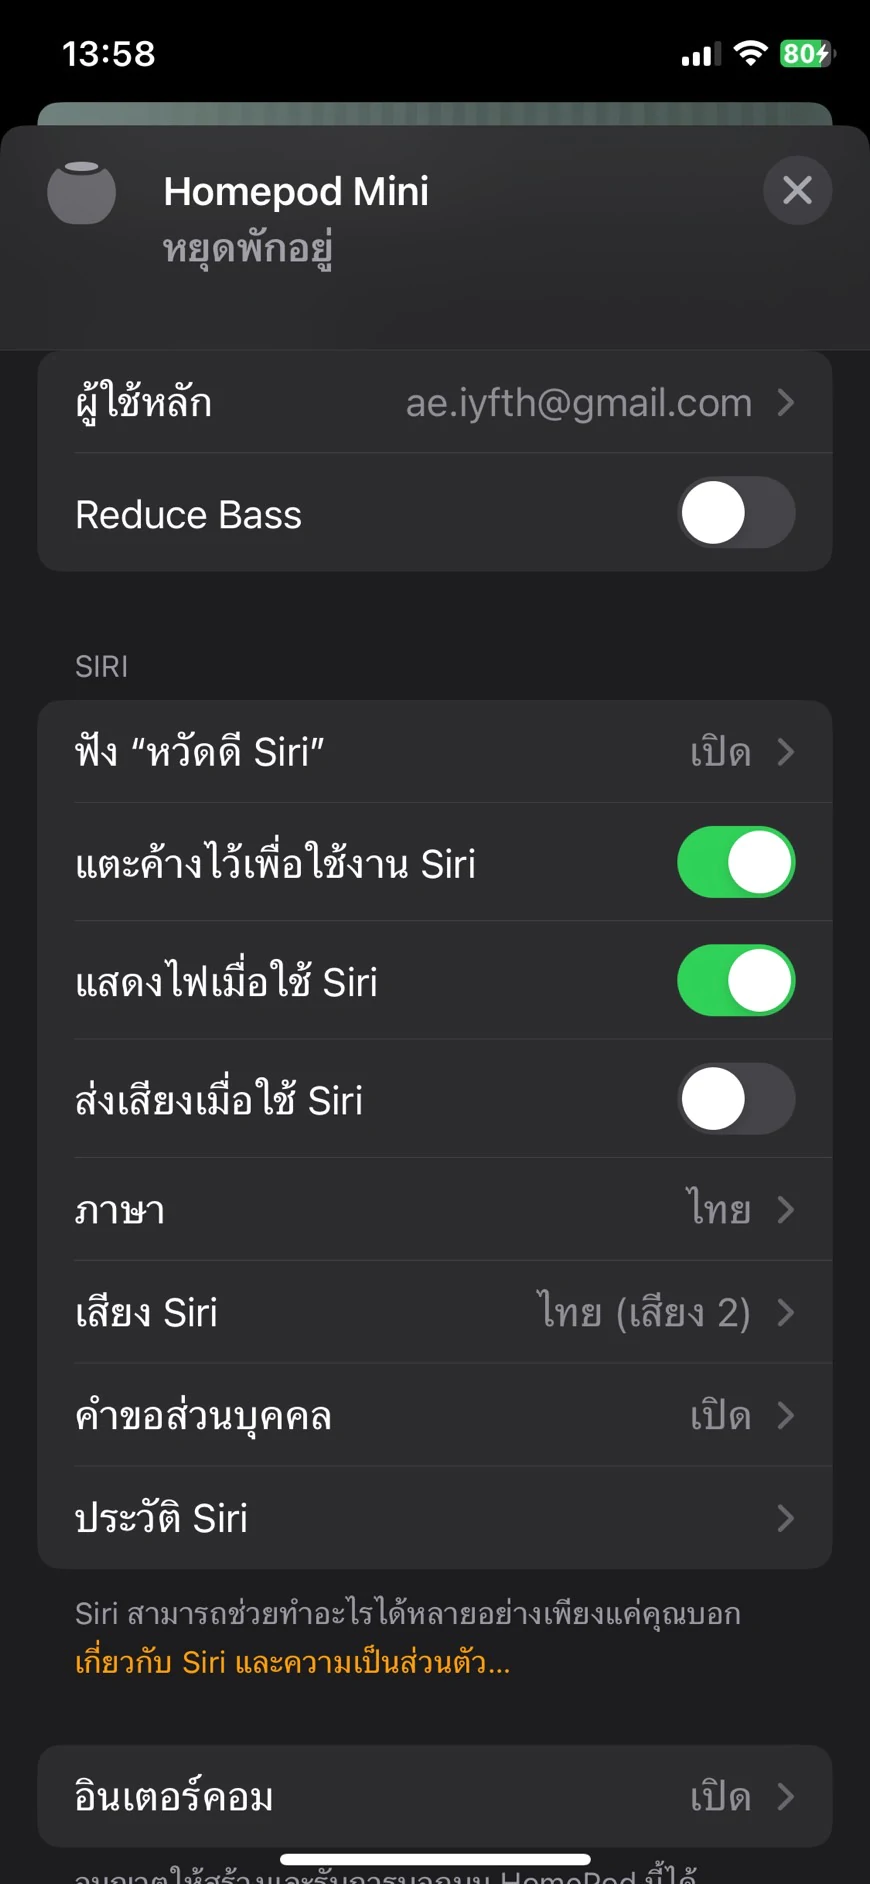 homepod audioos17 thai 2 | HomeKit | HomePod audioOS 17 รองรับการใช้งานภาษาไทยแล้ว หรือ Apple กำลังวางแผนเปิดตัวขาย HomePod ในประเทศไทย!